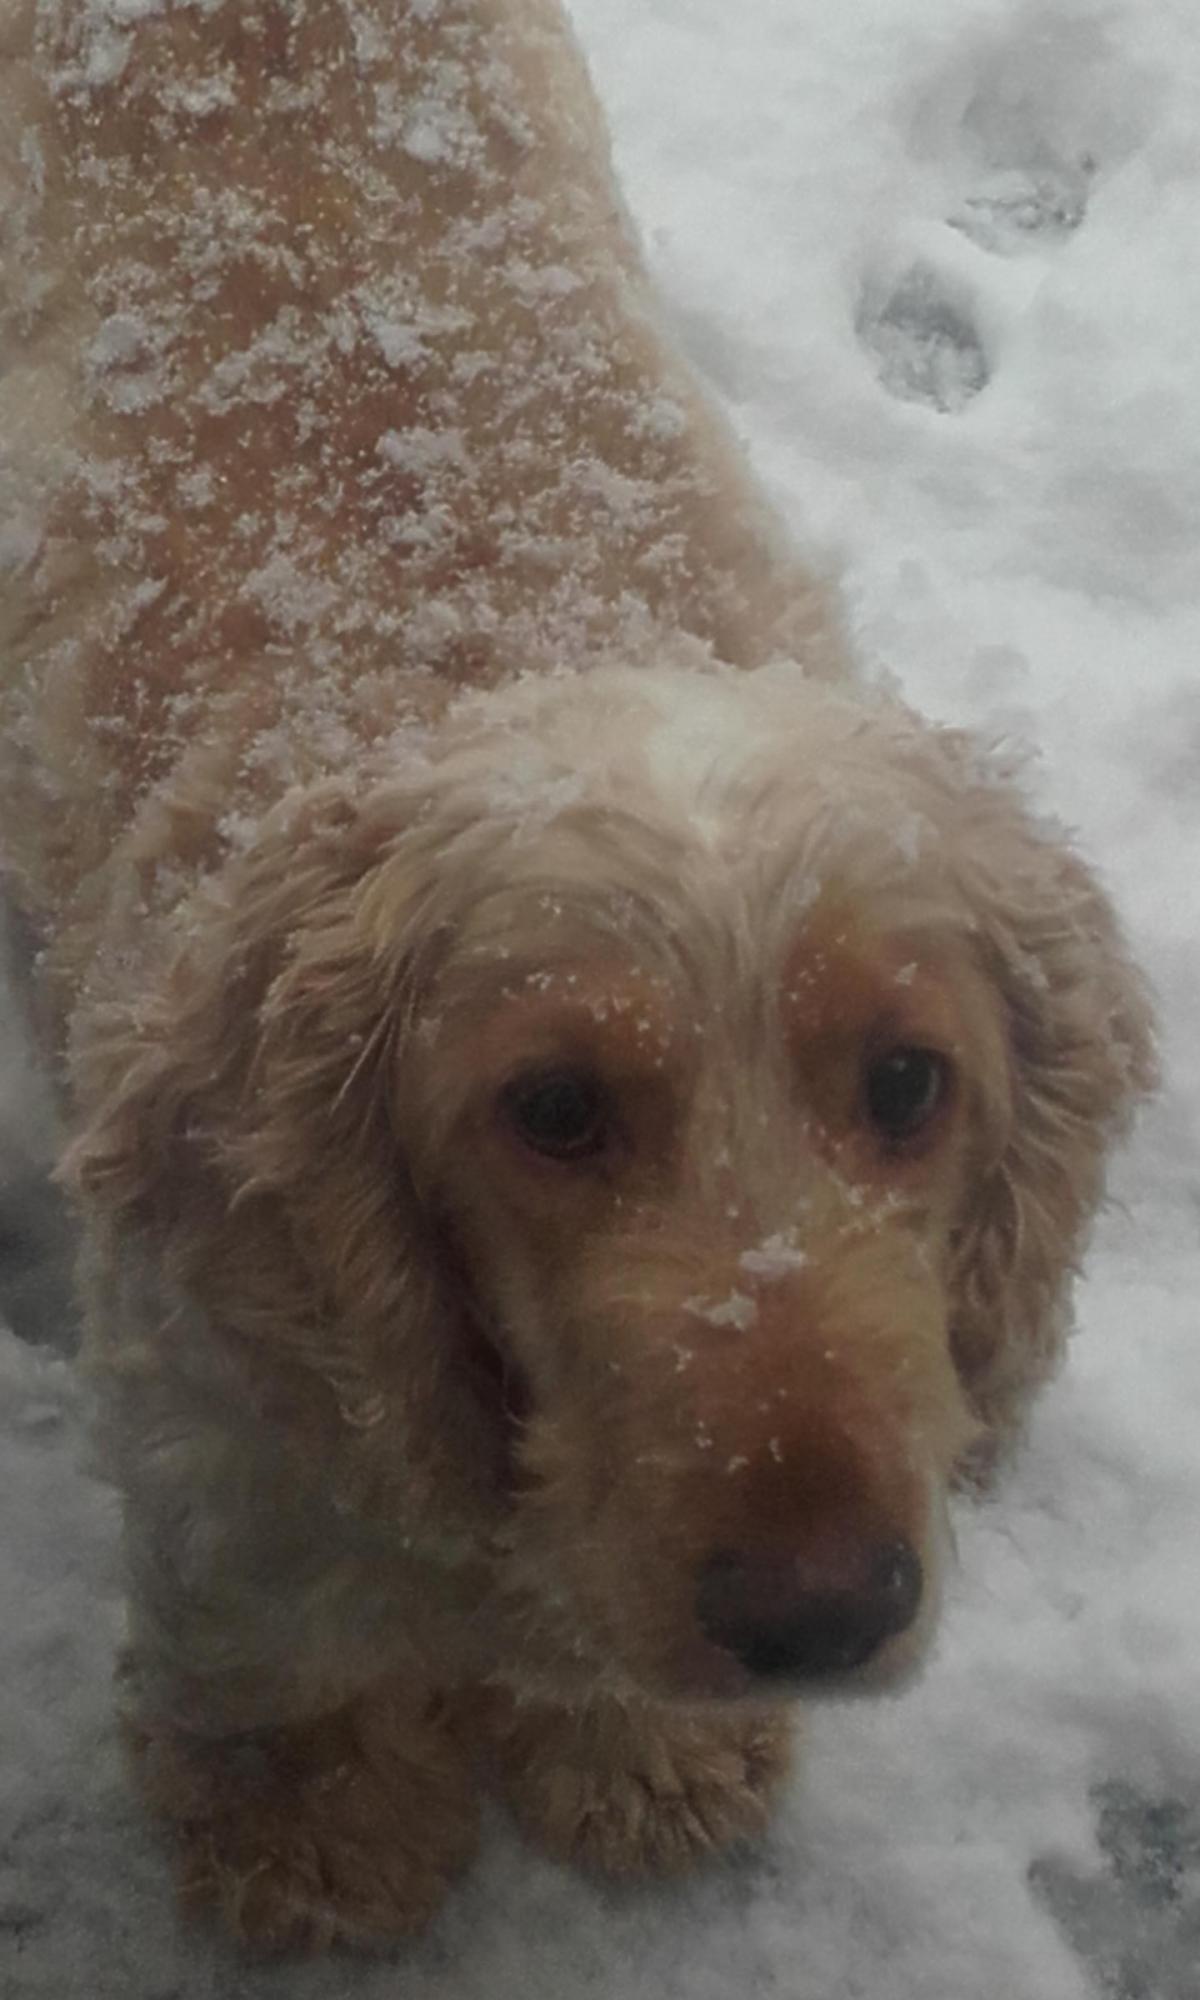 Nicola Boucher of Oakenshaw sent in this photo of her dog Milo